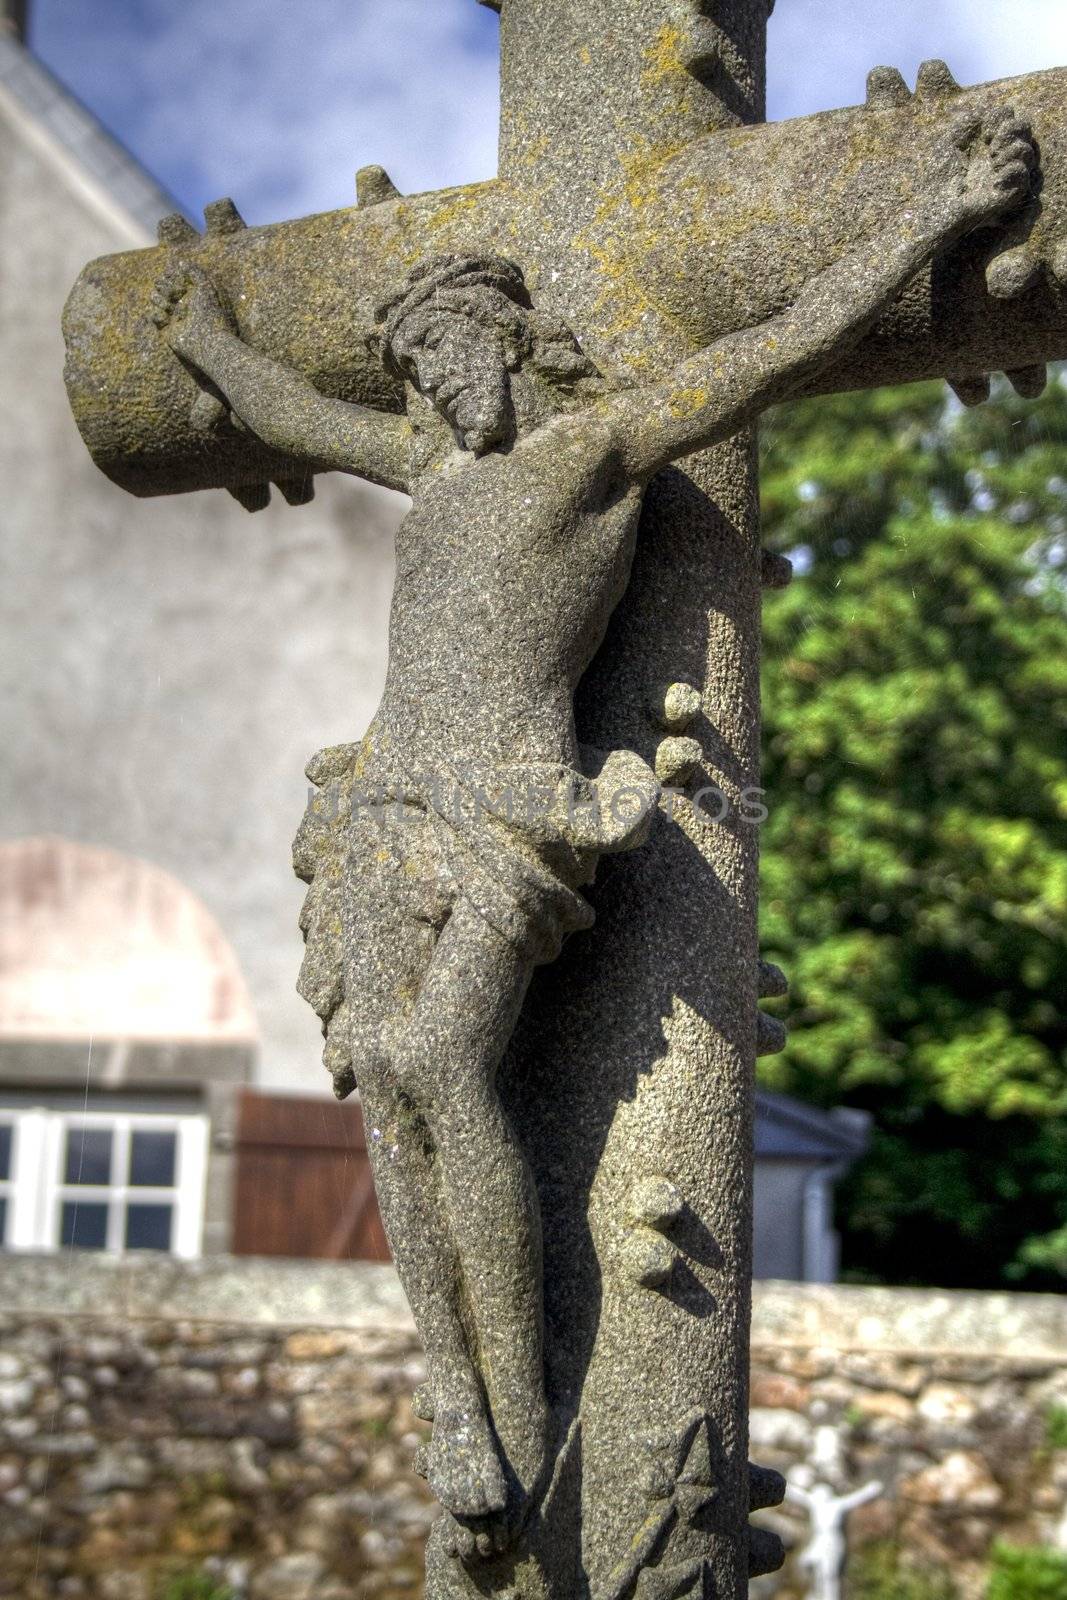 Jesus Christ on the cross, Landevennec, Brittany